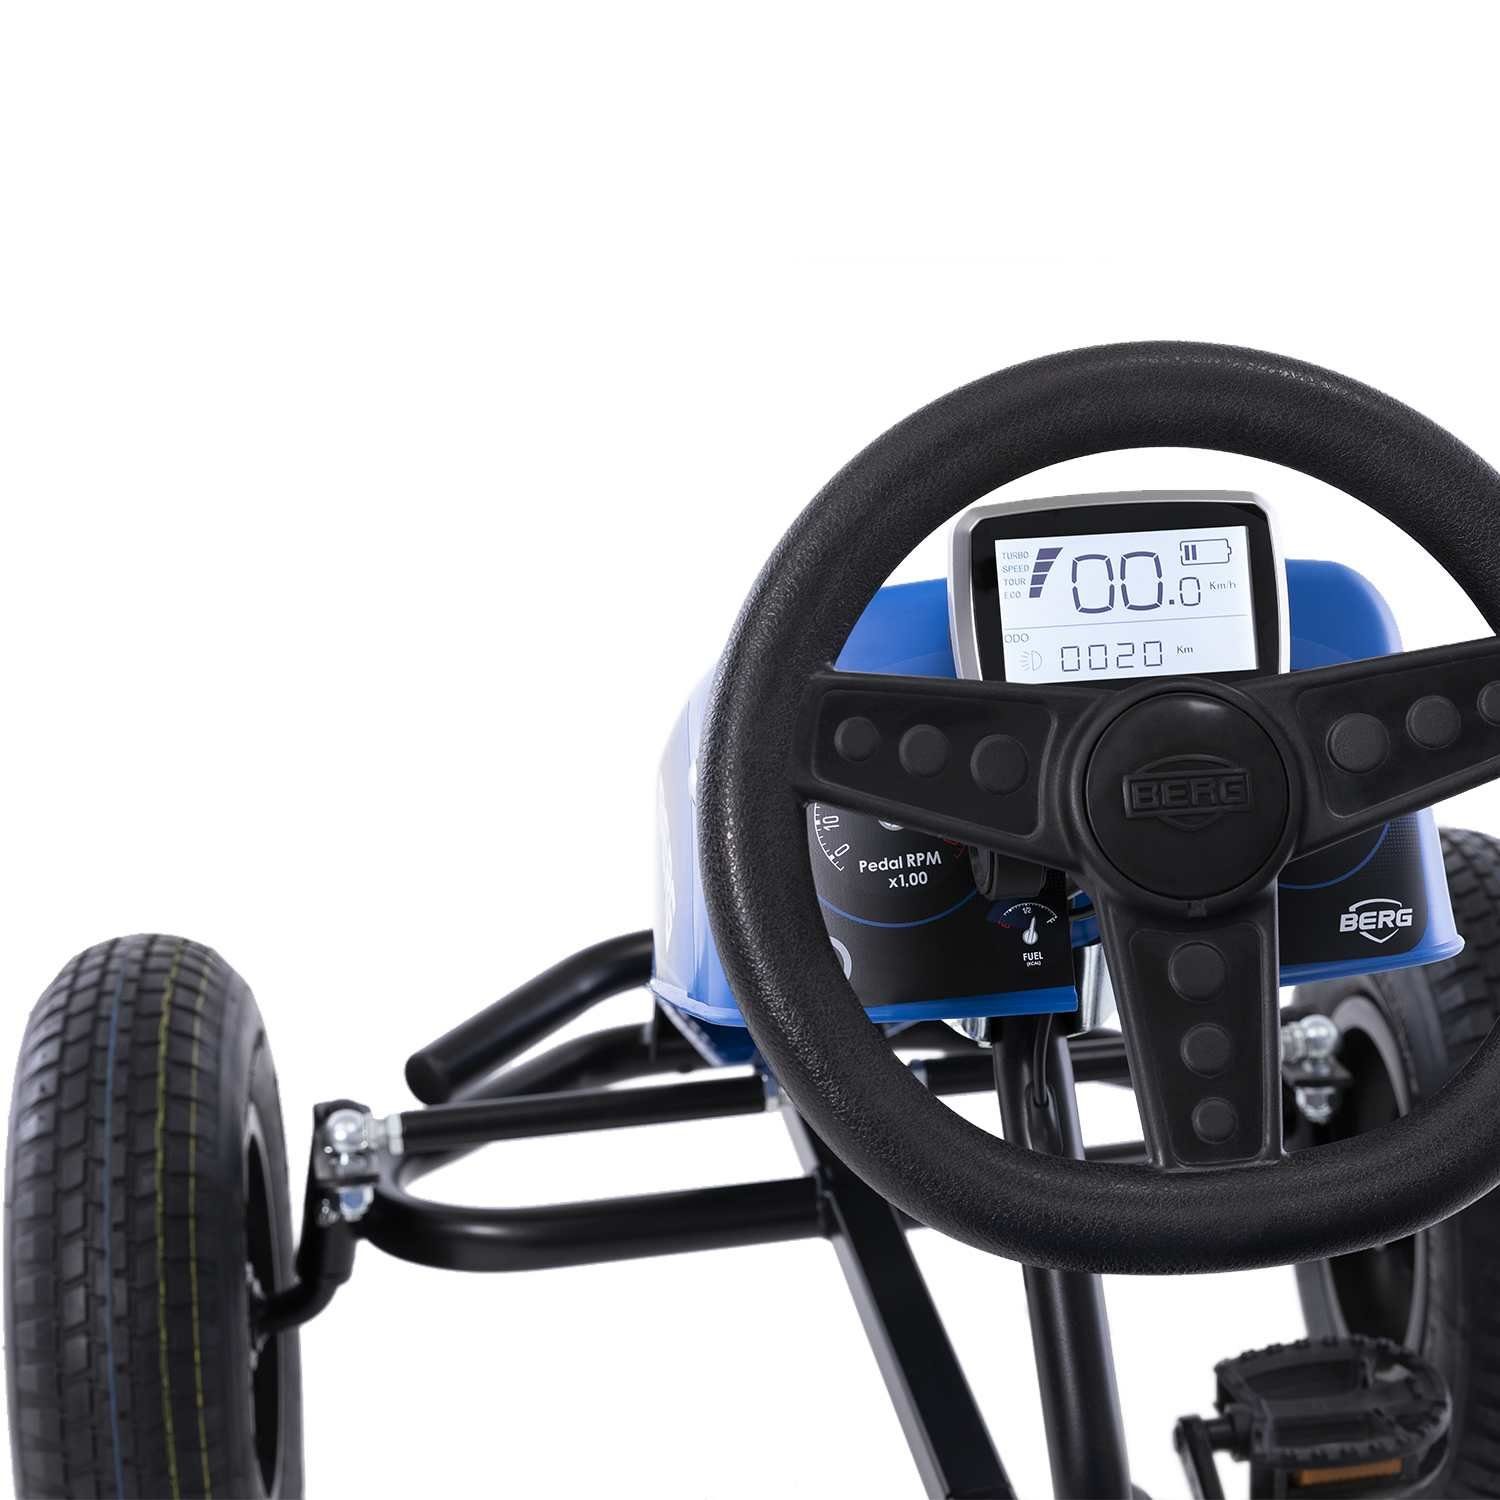 Gokart Hybrid mit E-Motor Black Go-Kart Edition schwarz Berg BERG Dreigangschaltung